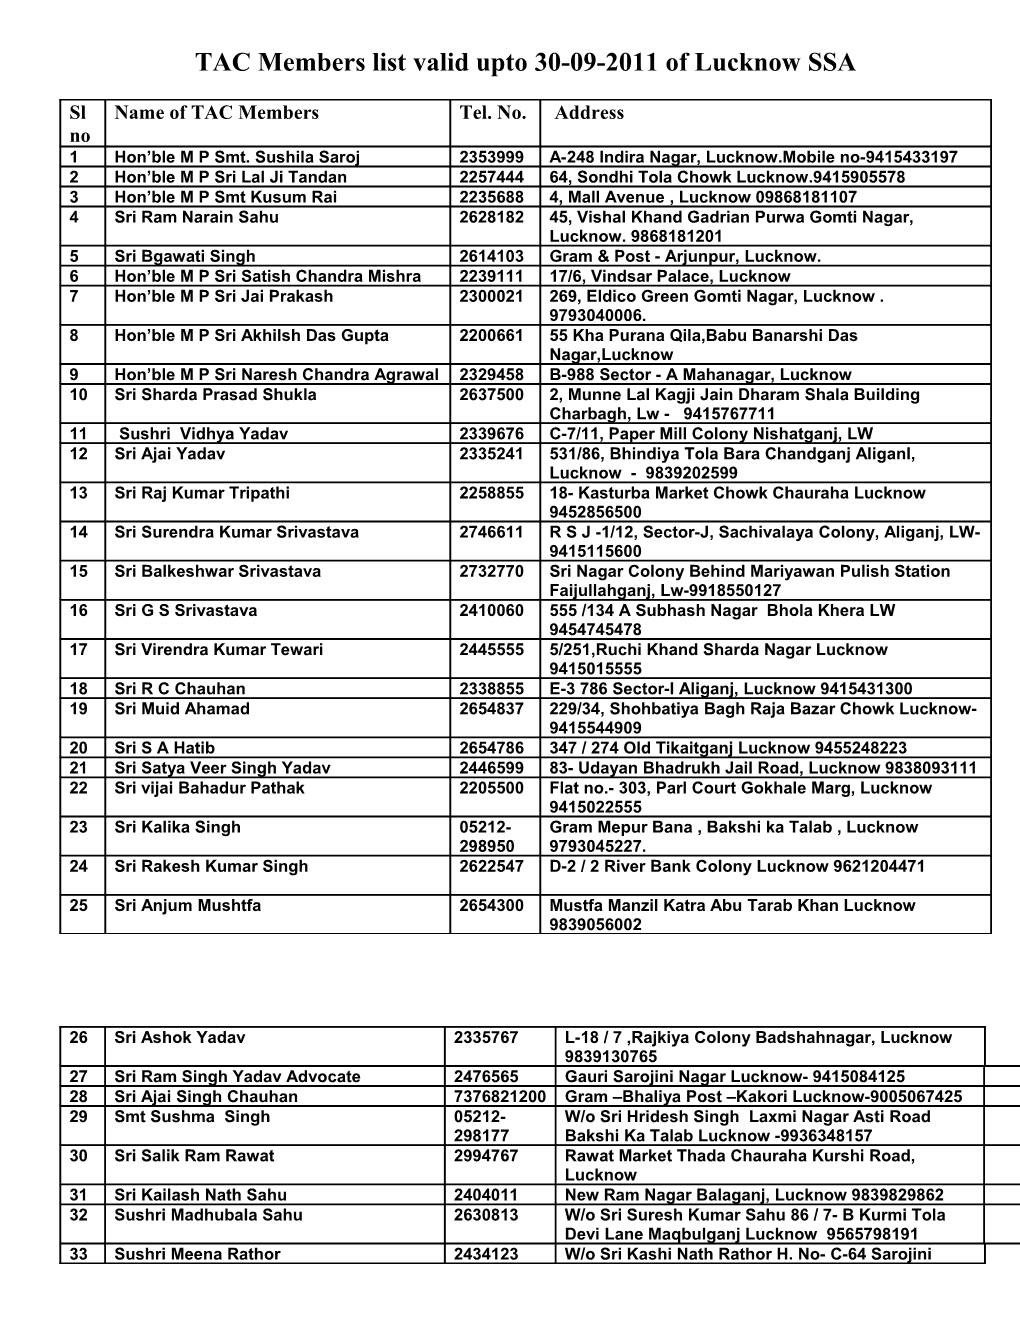 TAC Members List Valid Upto 30-09-2011 of Lucknow SSA